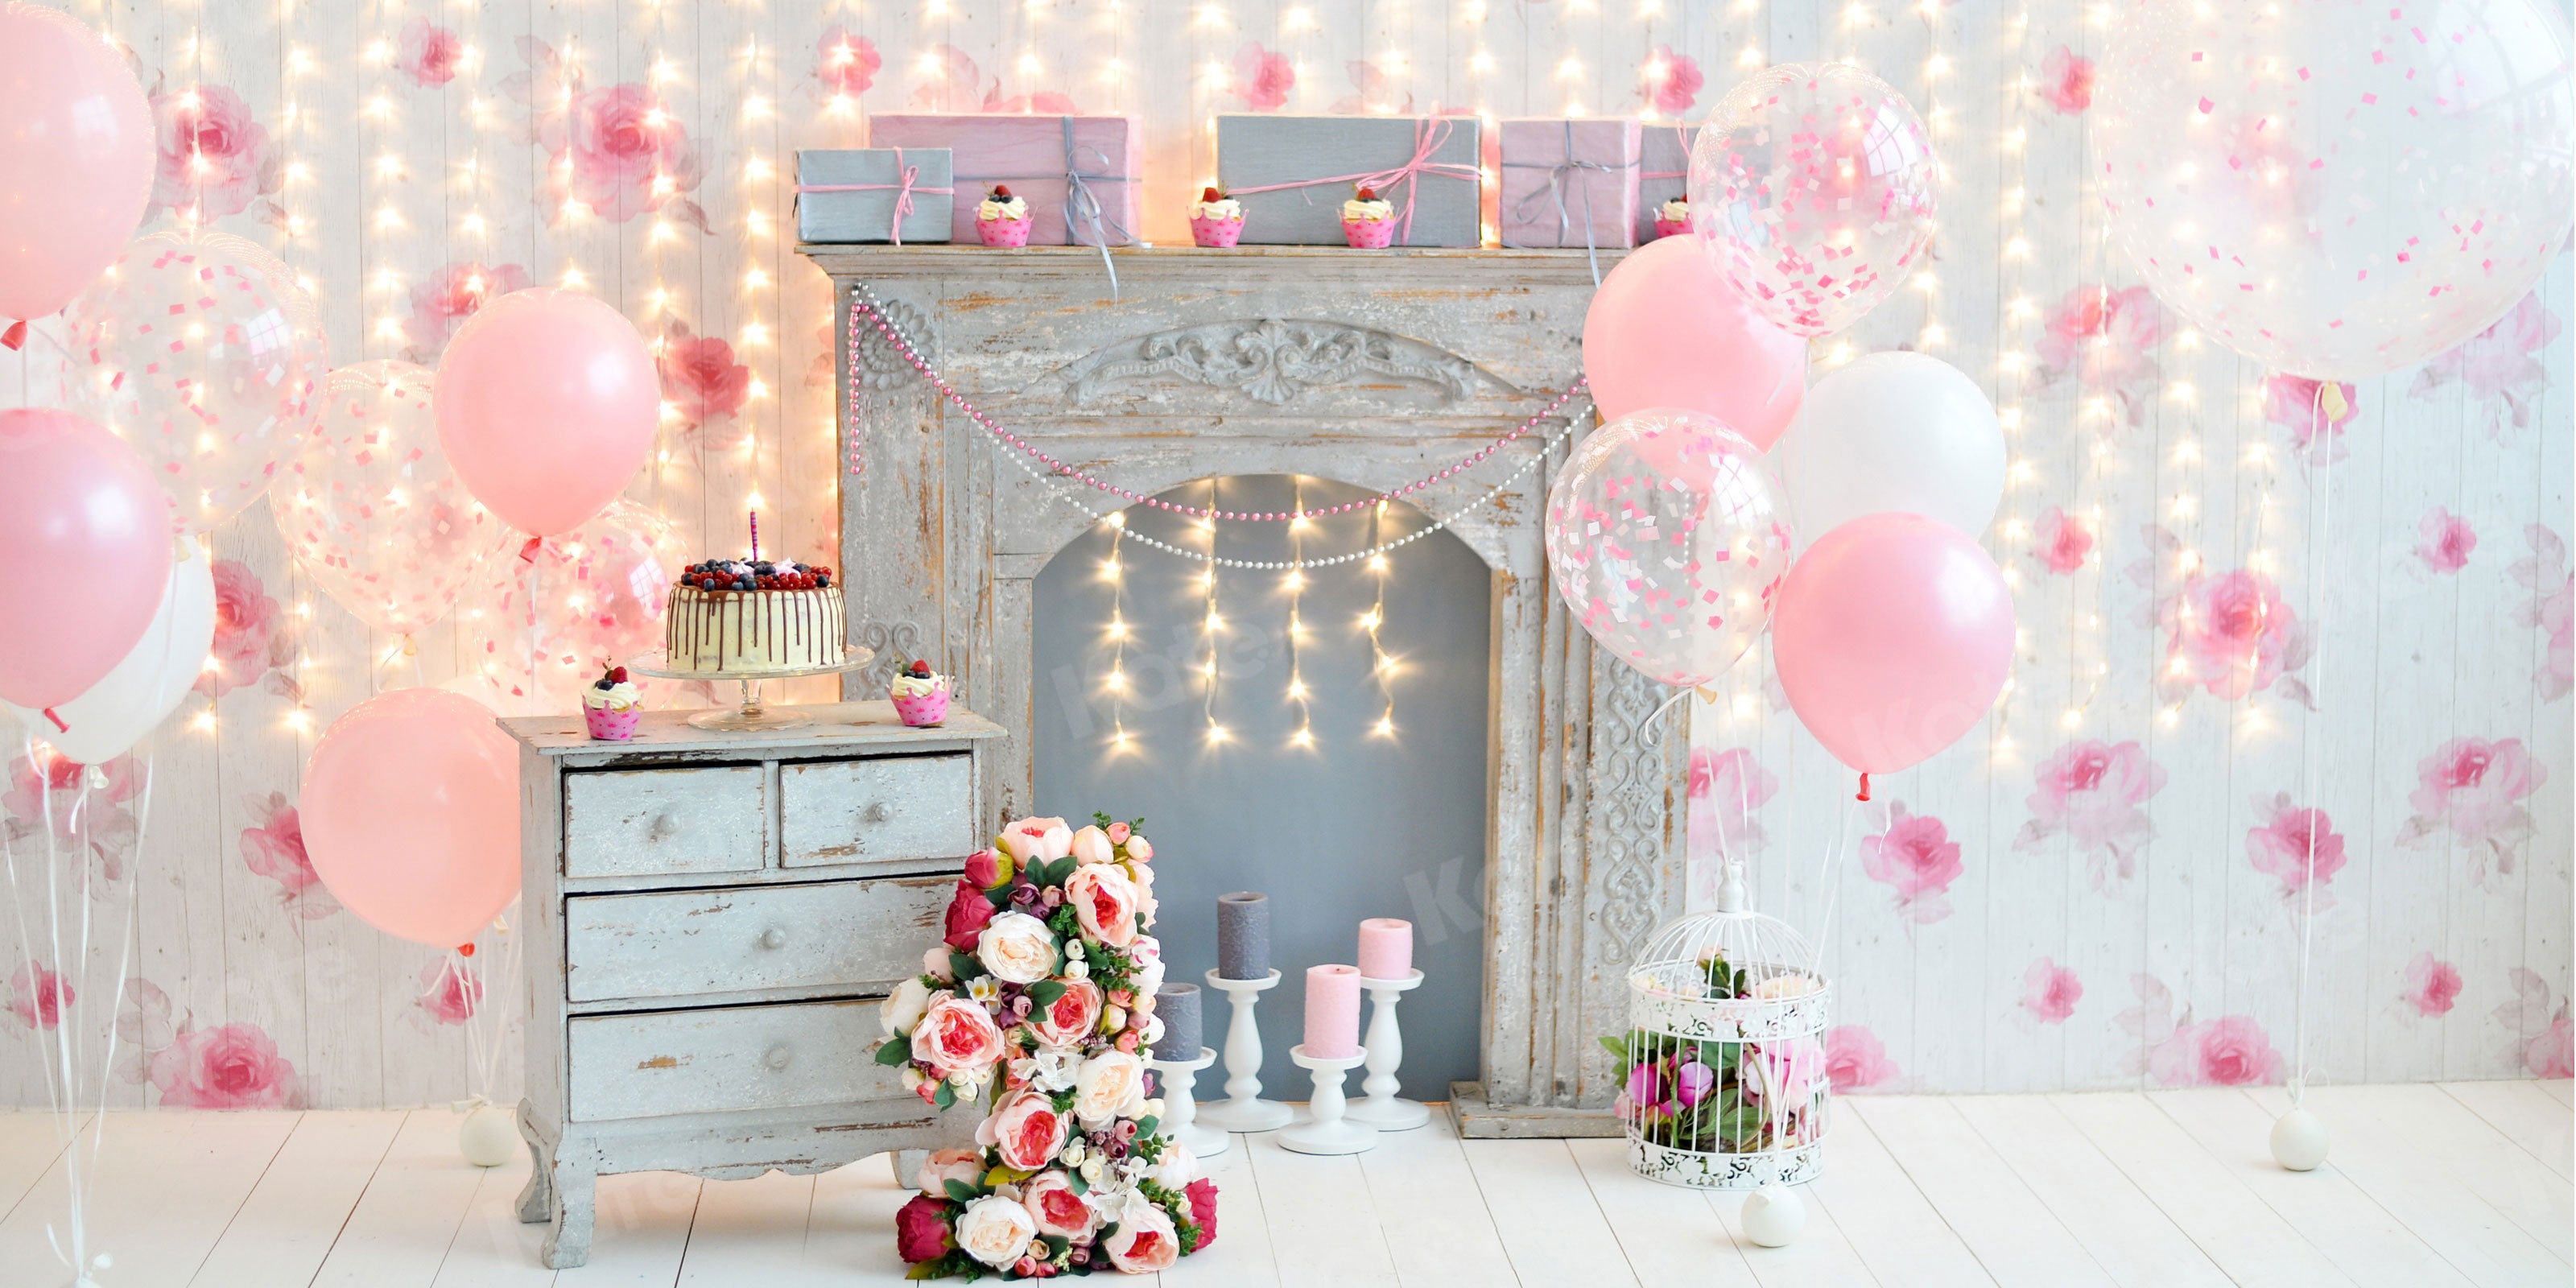 Kate Cake Smash For Party Photography Pink 1st birthday Backdrop Balloons - Katebackdrop